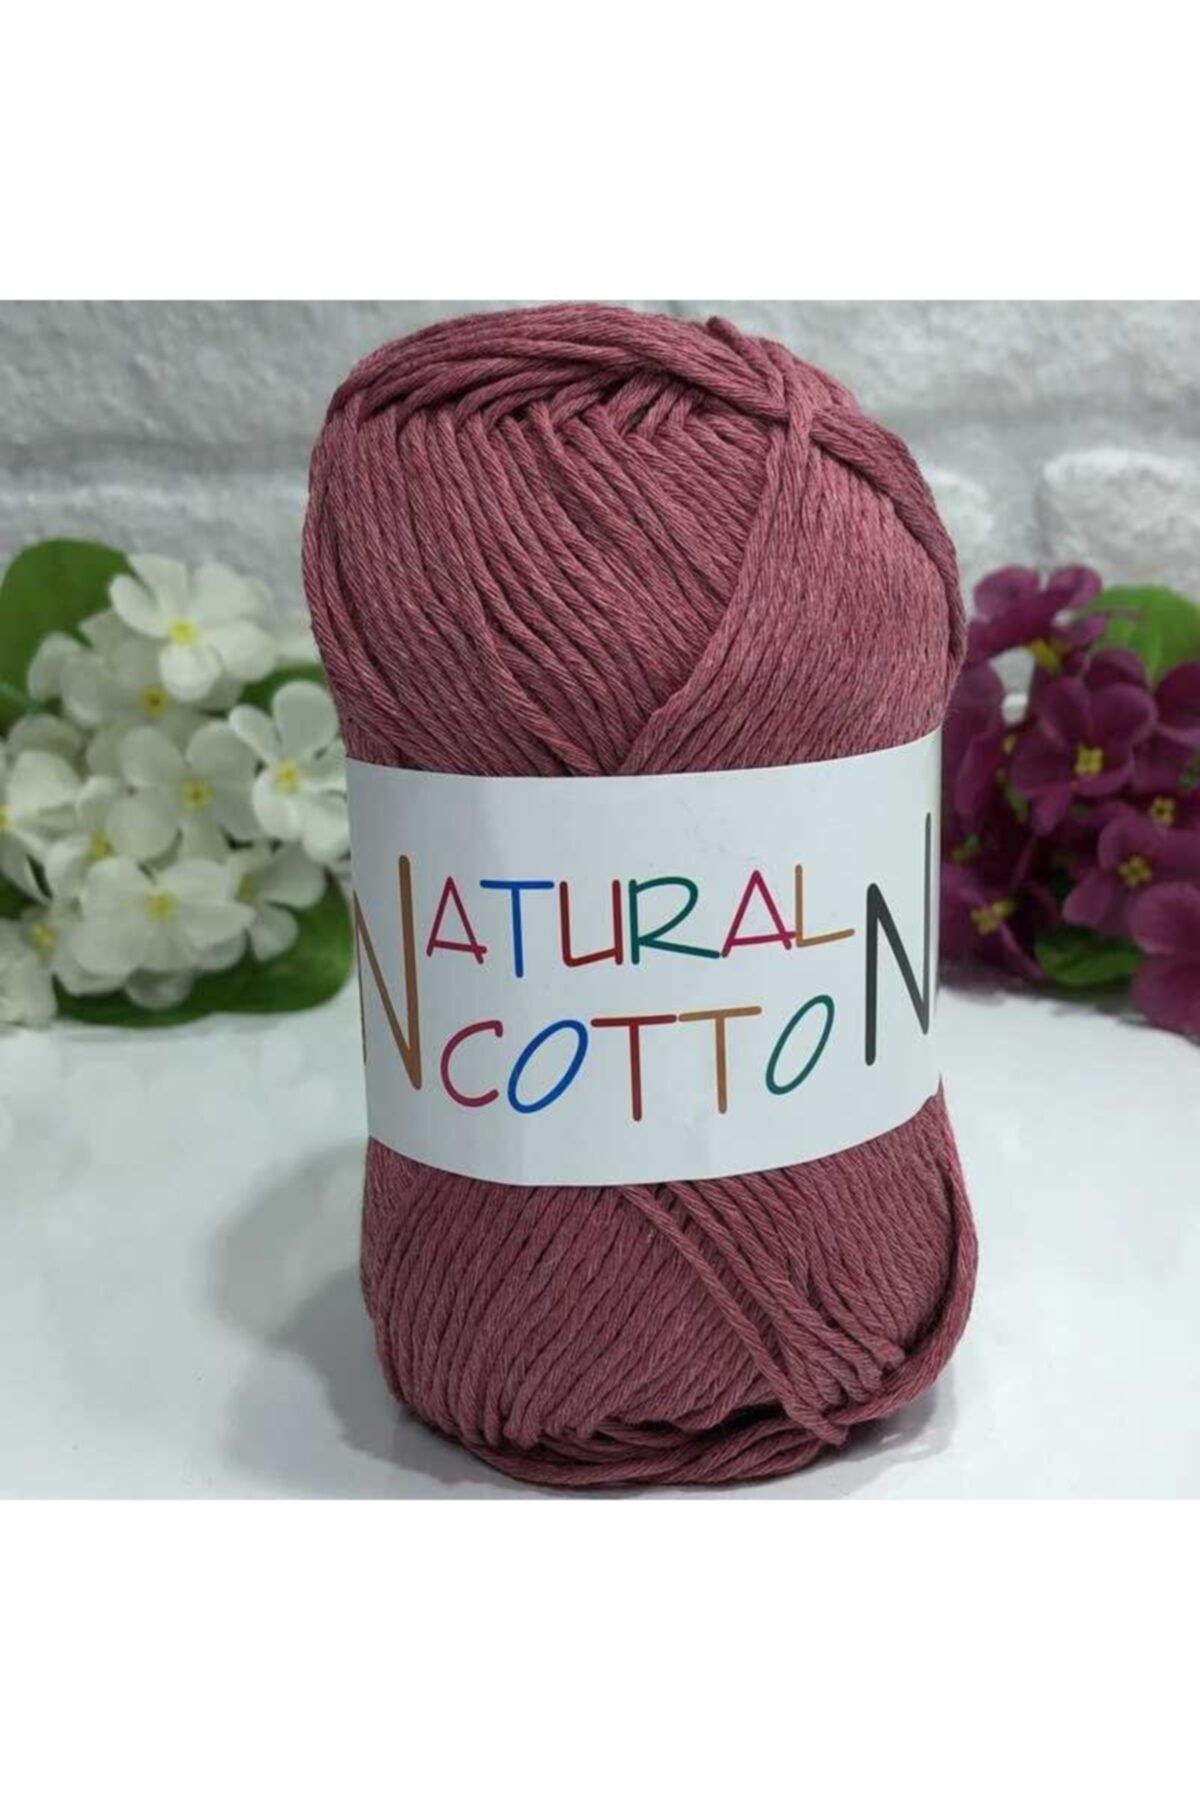 Diva İplik Diva Natural Cotton 1005